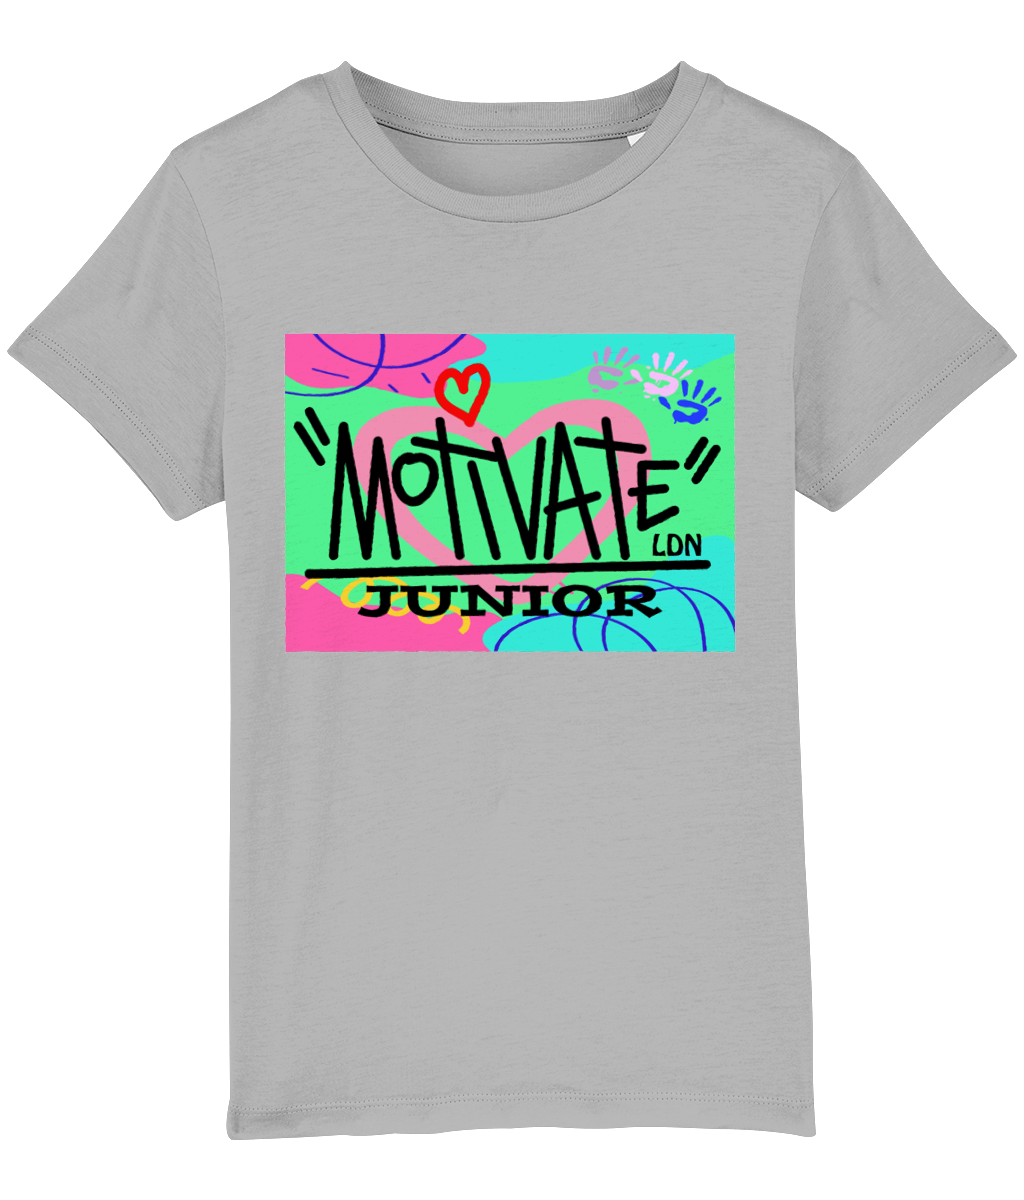 Motivate LDN Junior Kids T-Shirt (extra colours)